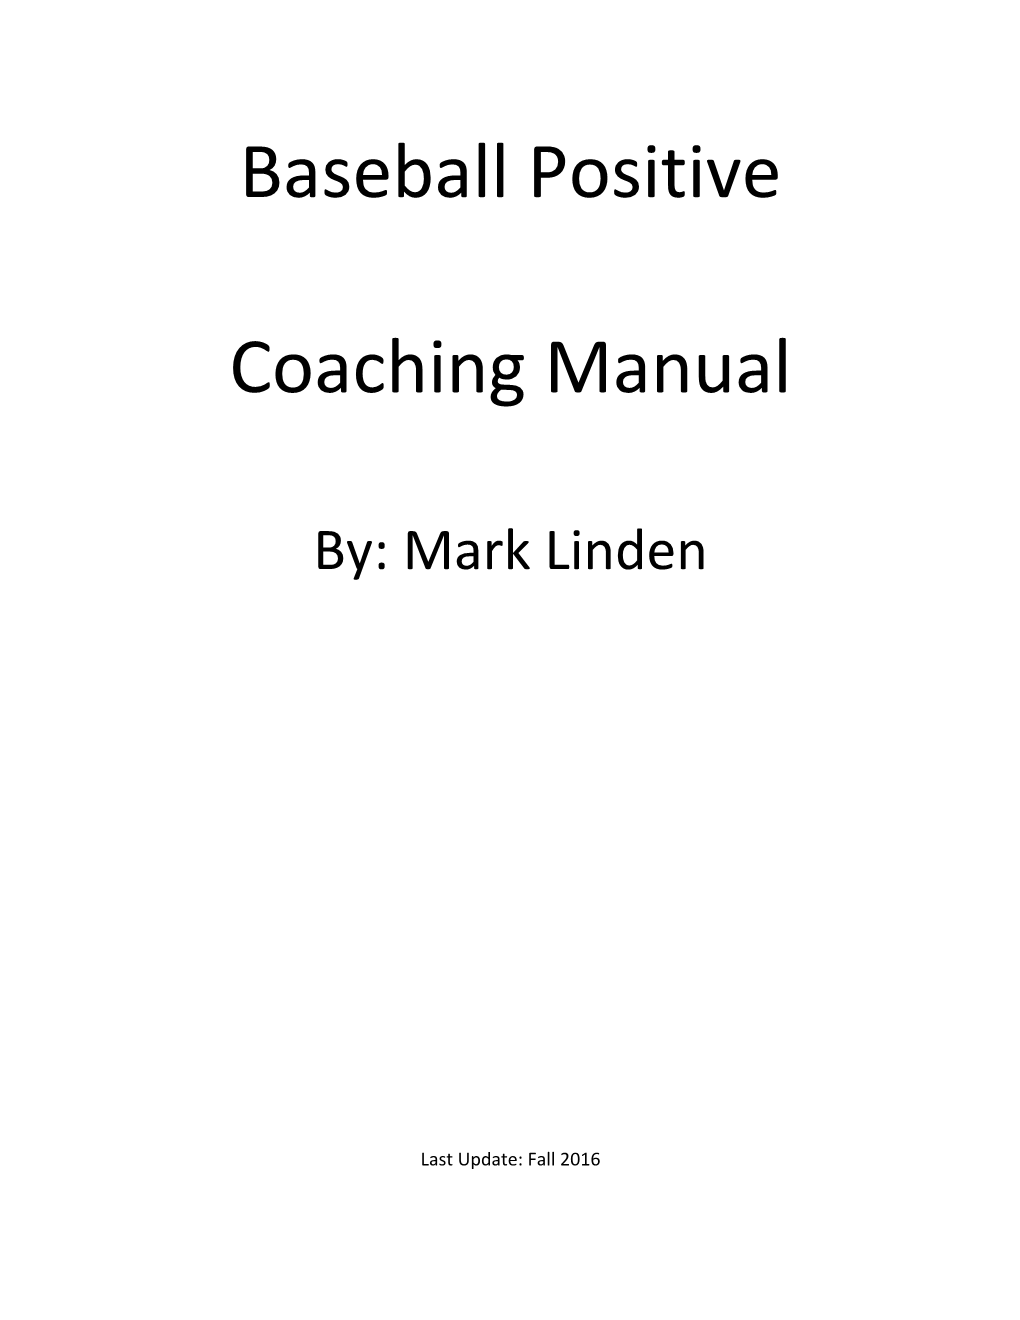 Baseball Positive Coaching Manual